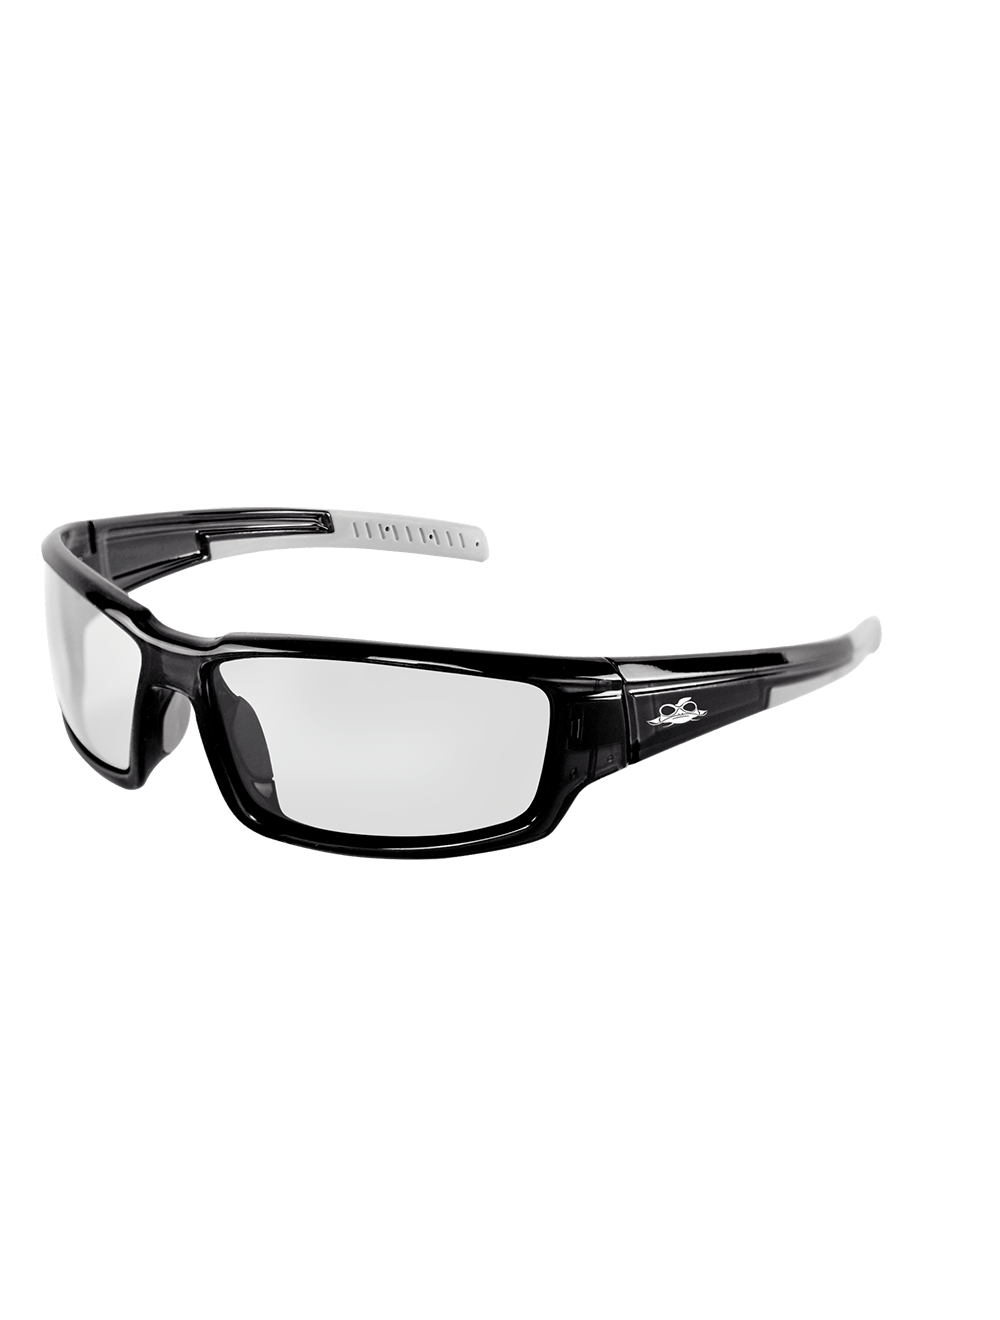 Maki® Clear Performance Fog Technology Lens, Crystal Black Frame Safety Glasses - BH1431PFT